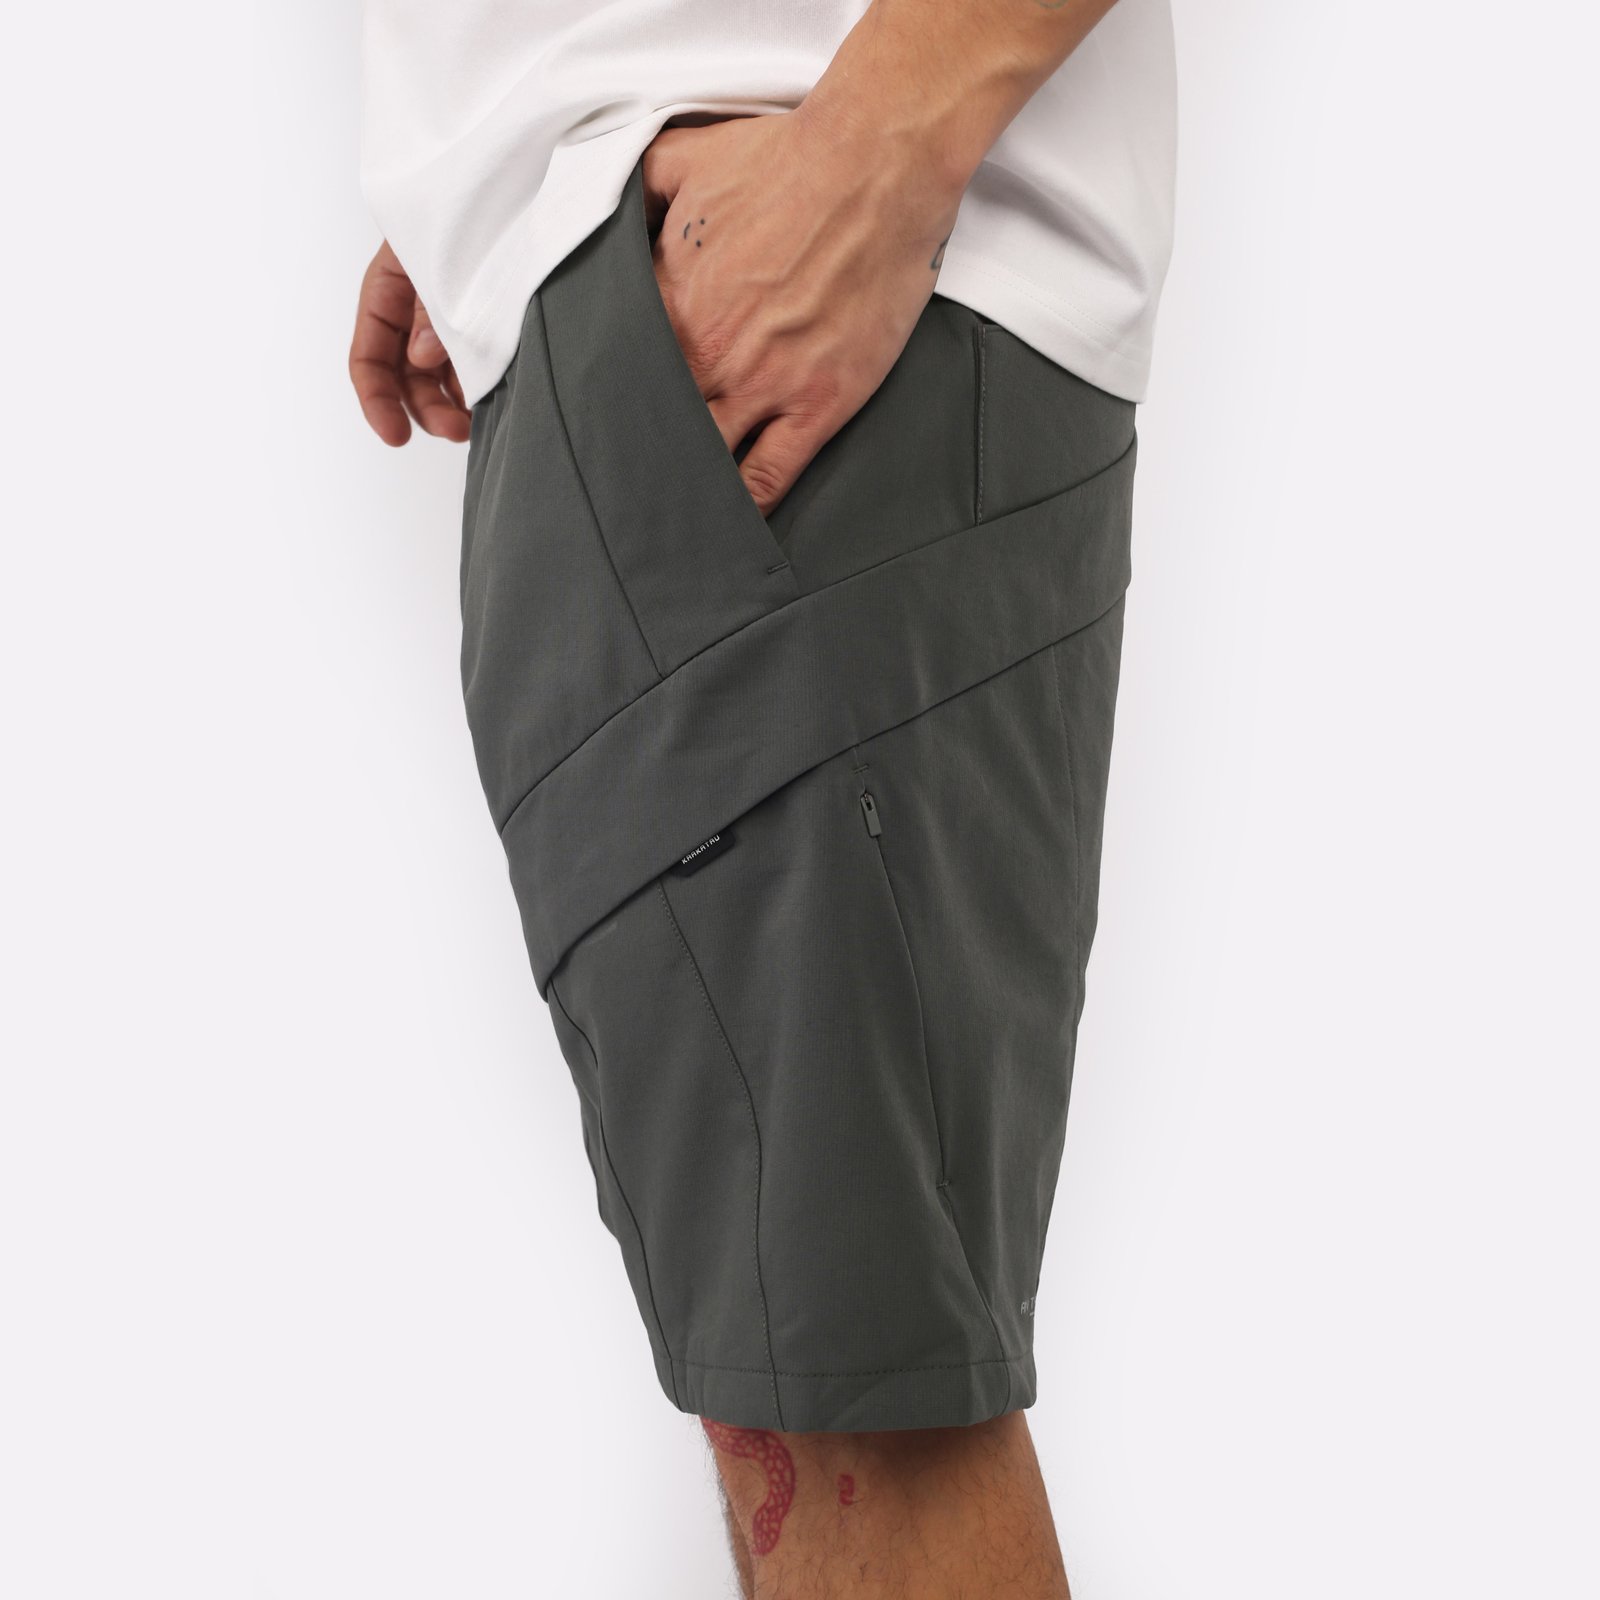 мужские шорты KRAKATAU Rm183-52  (Rm183-52-елово-сер)  - цена, описание, фото 4